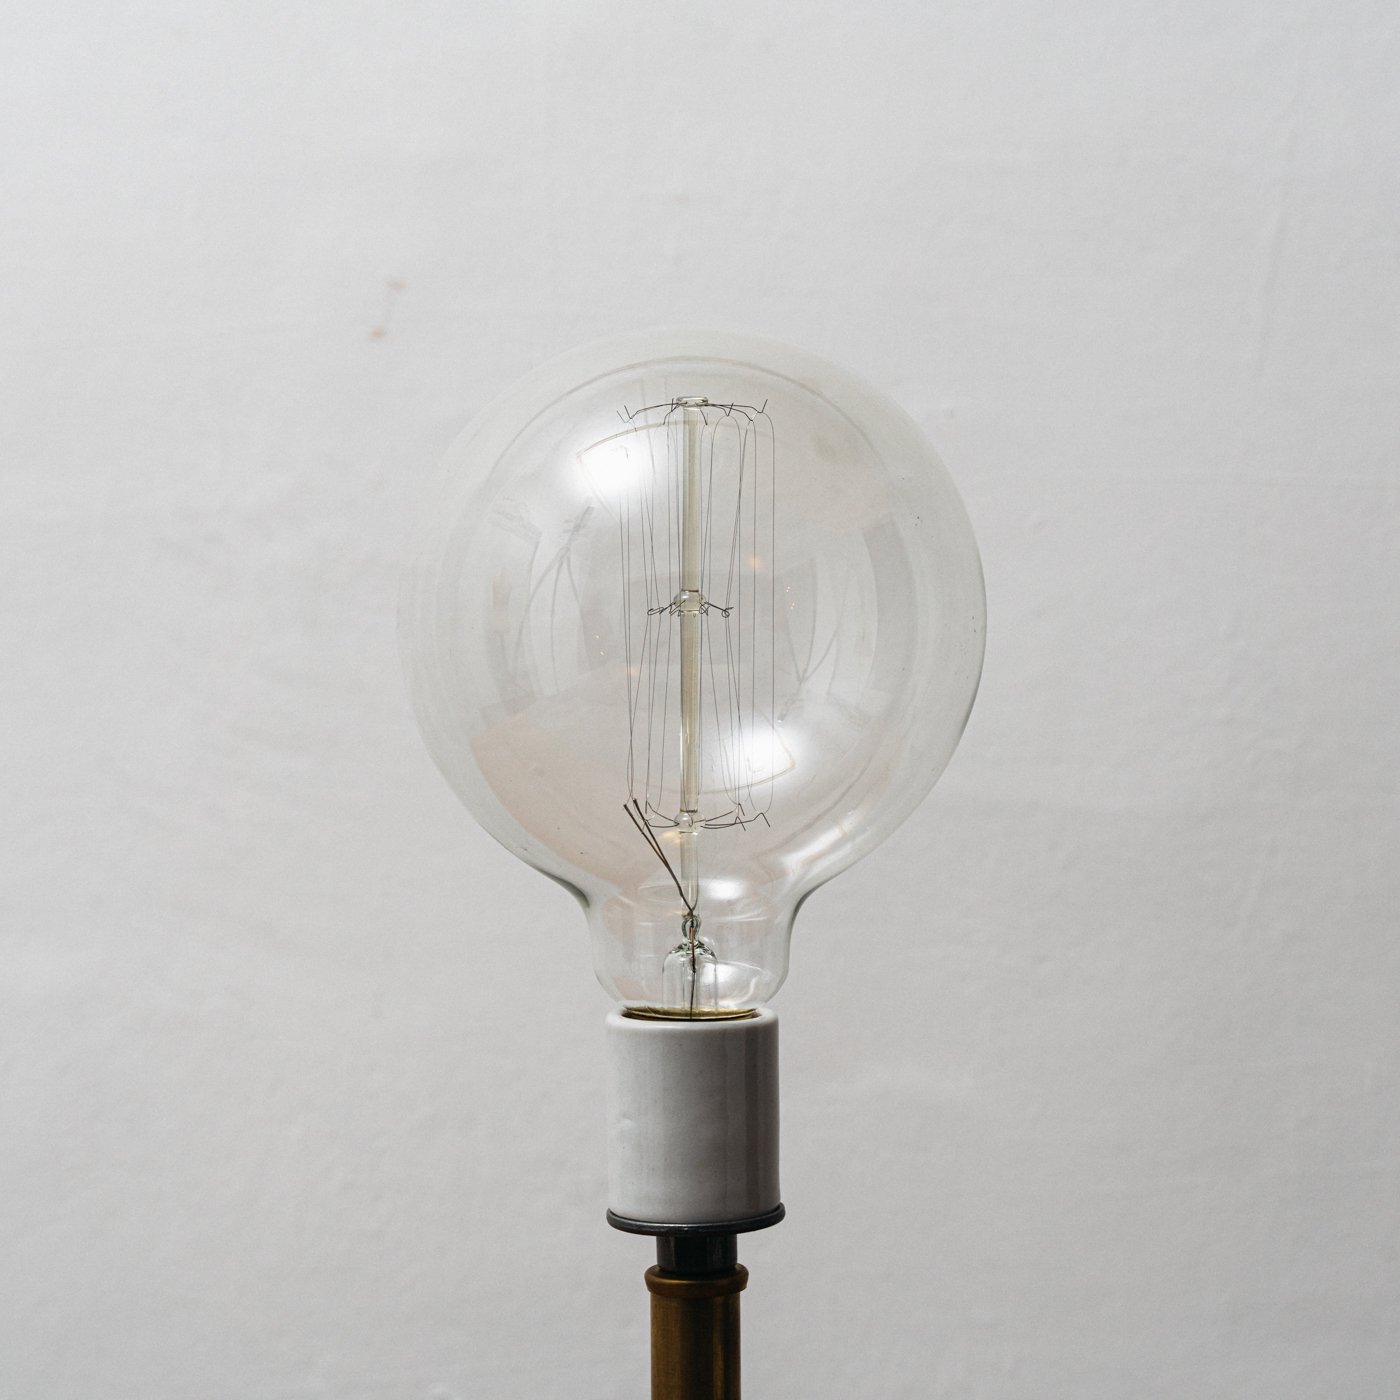 LAMP BULB E26 60W - EDISON GLOBE L - POINT NO.39｜東京｜目黒｜真鍮照明｜エジソン電球